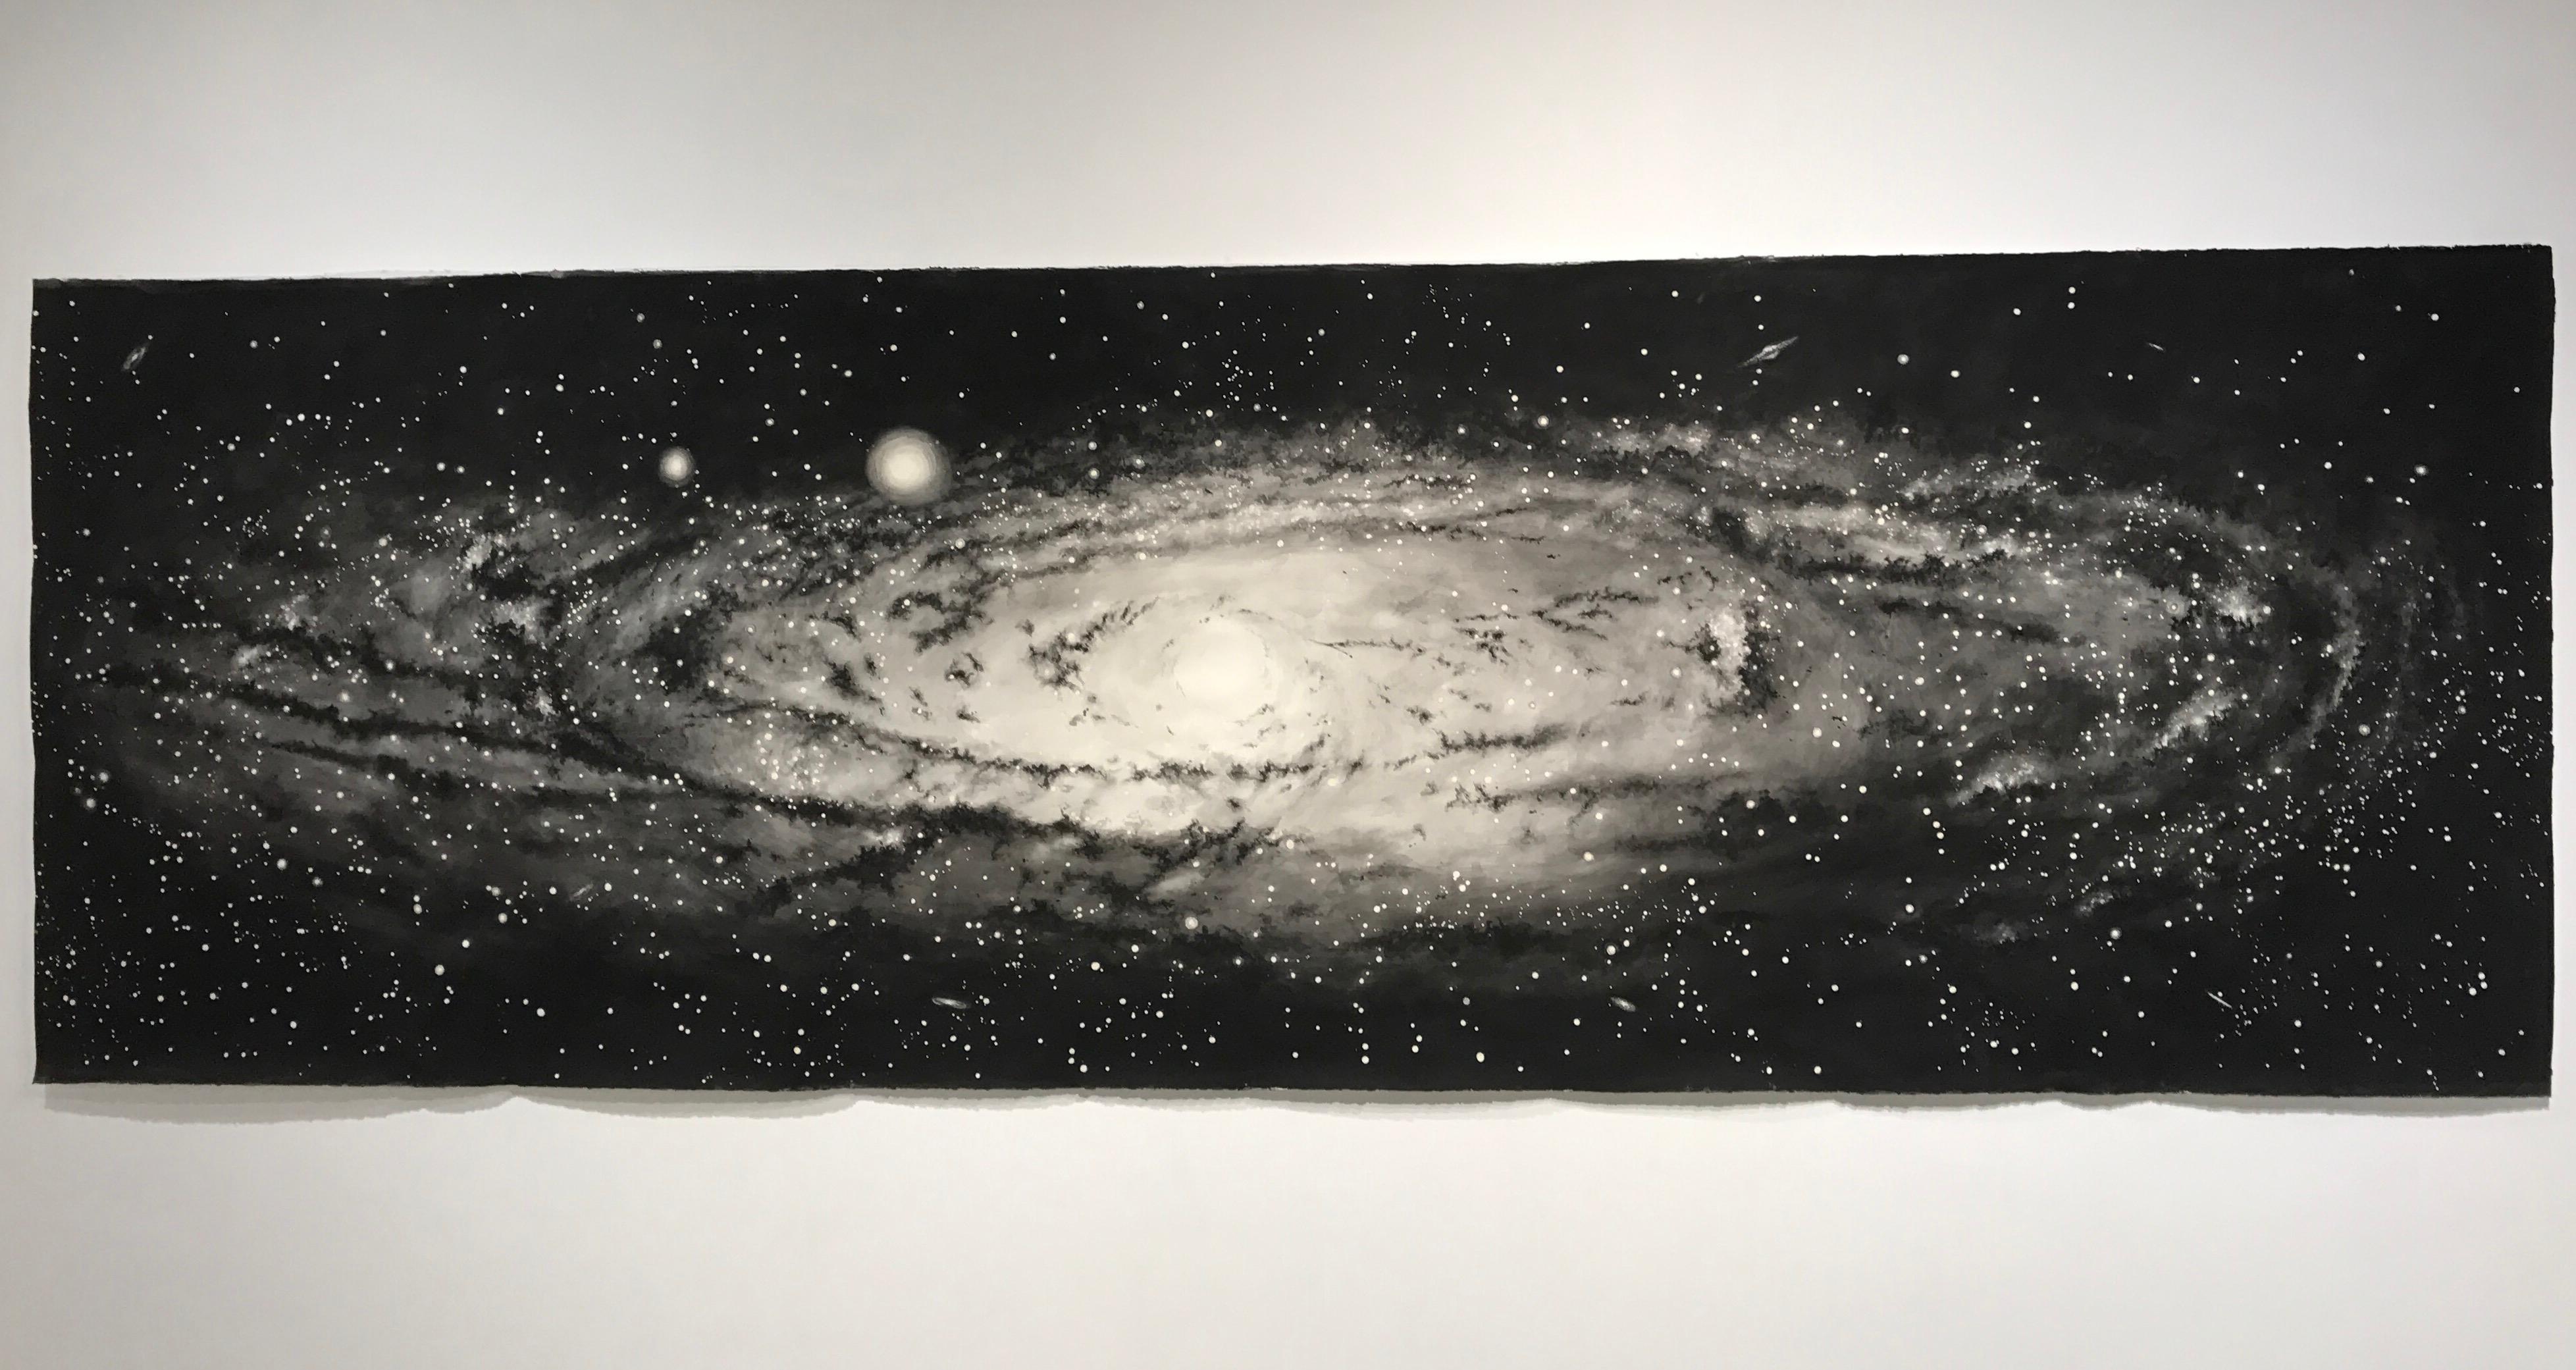 Aquarelle Galaxy à grande échelle de Thomas Broadbent